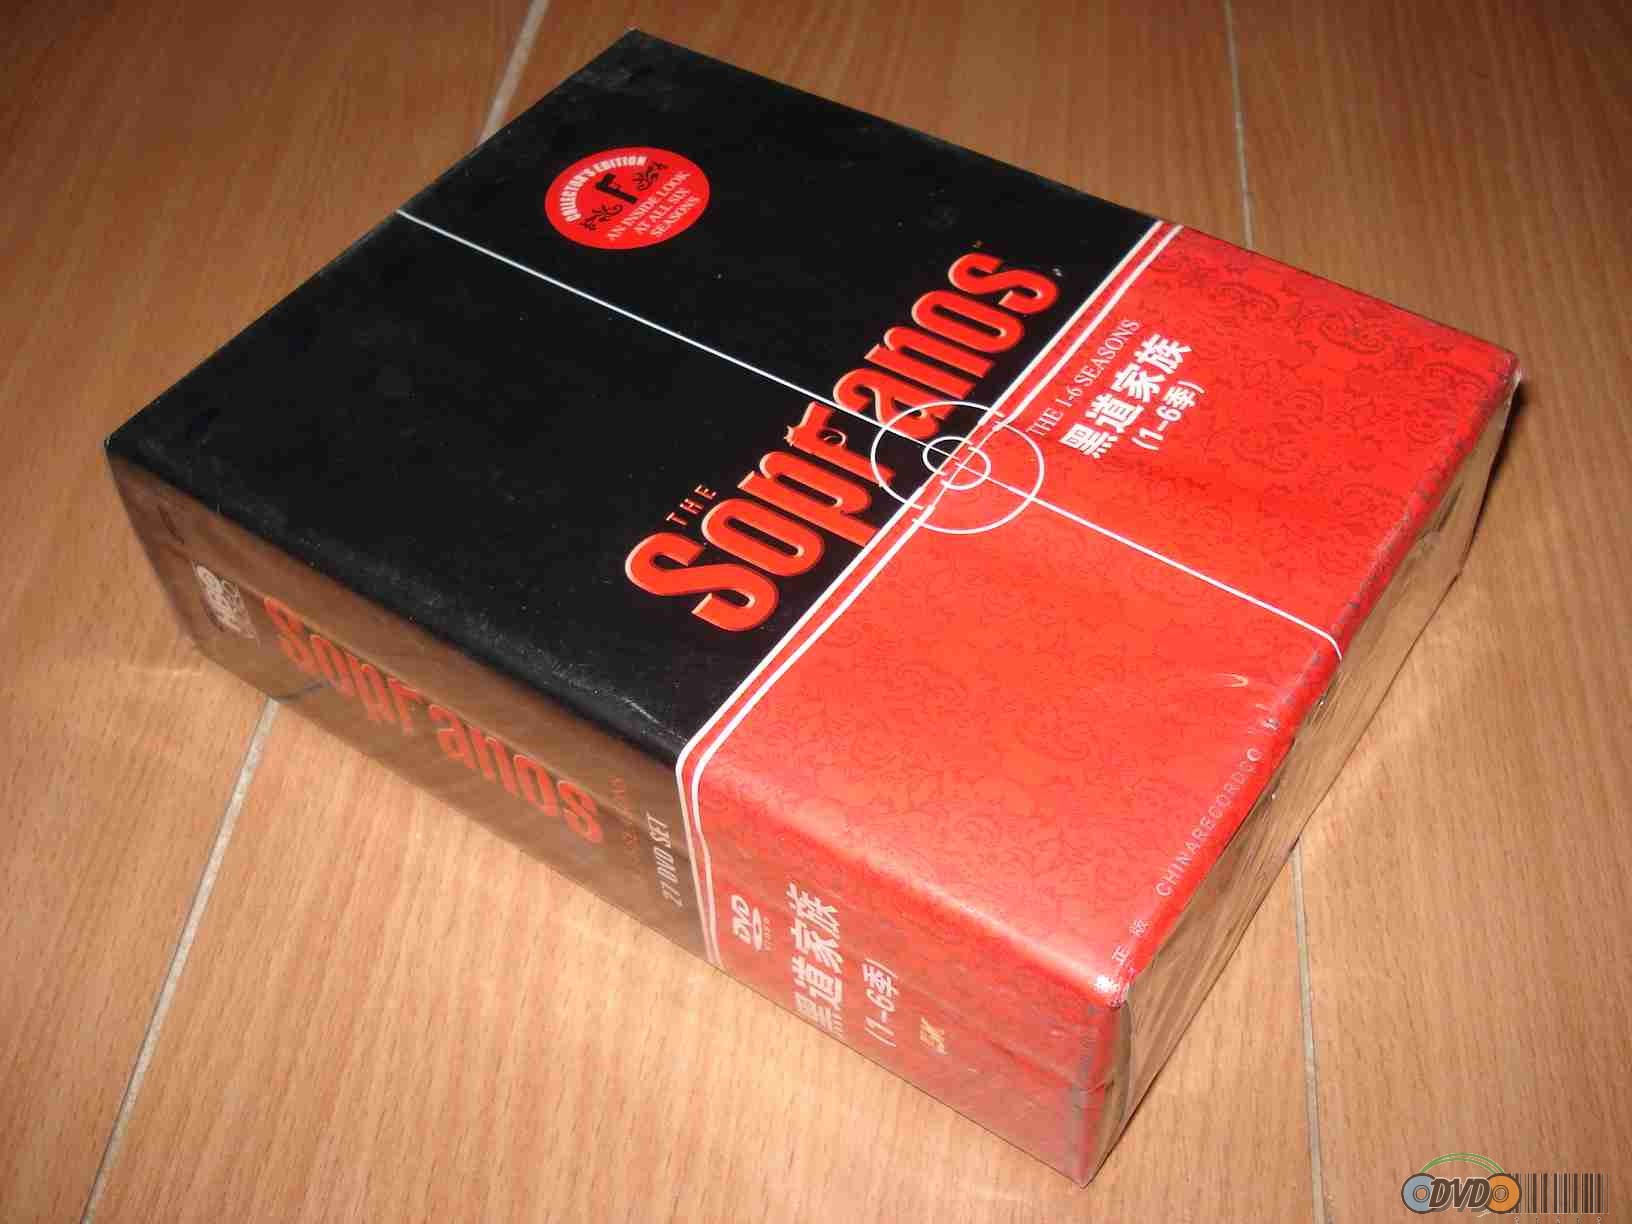 THE SOPRANOS SEASONS 1 2 3 4 5 6 BOXSET 27 DVDs(3 Sets)